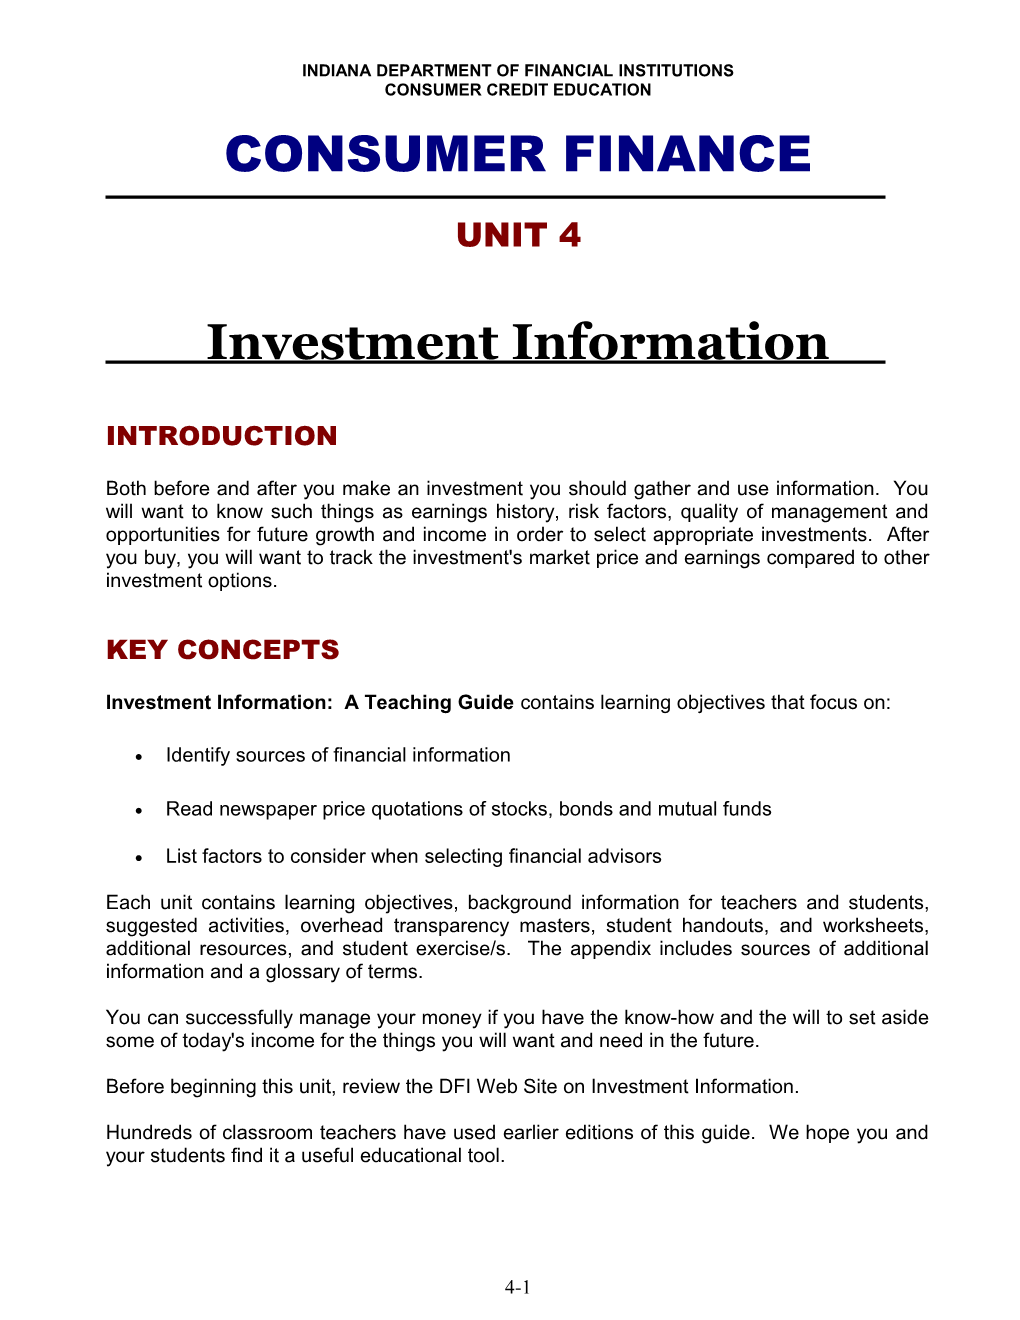 Basics Of Saving & Investing : Financial Decisions (Unit 1)